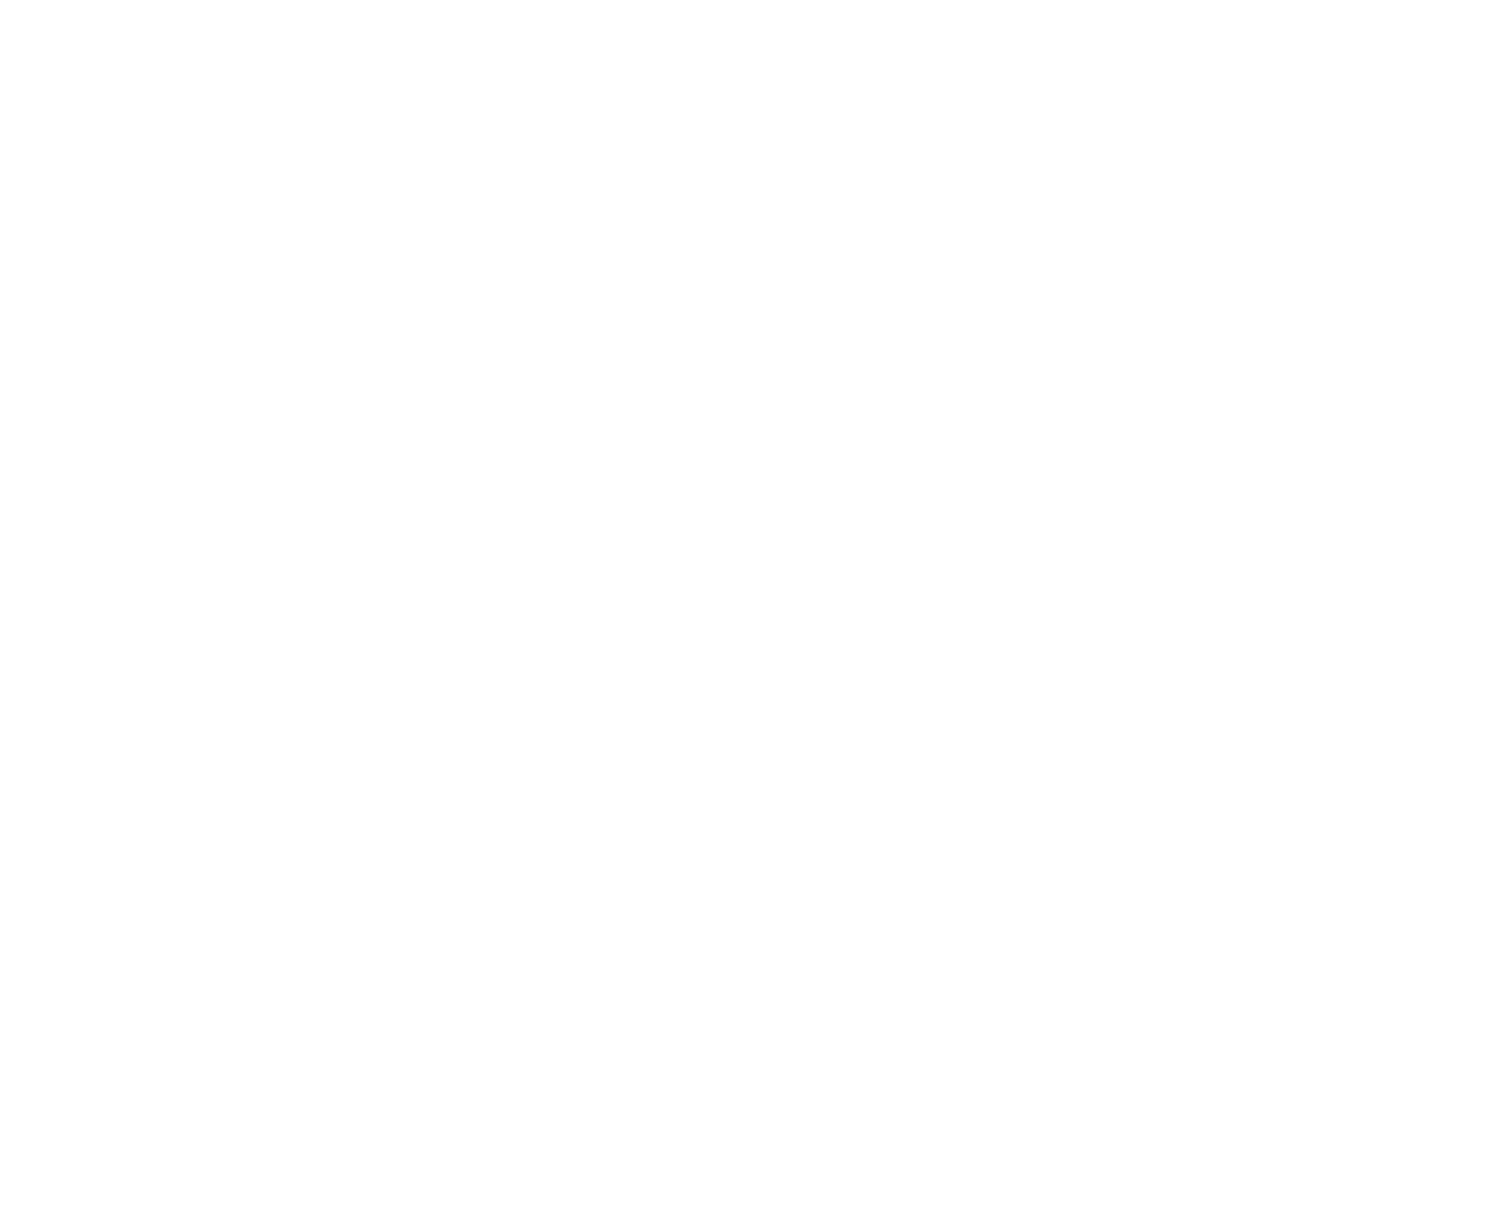 715 Club